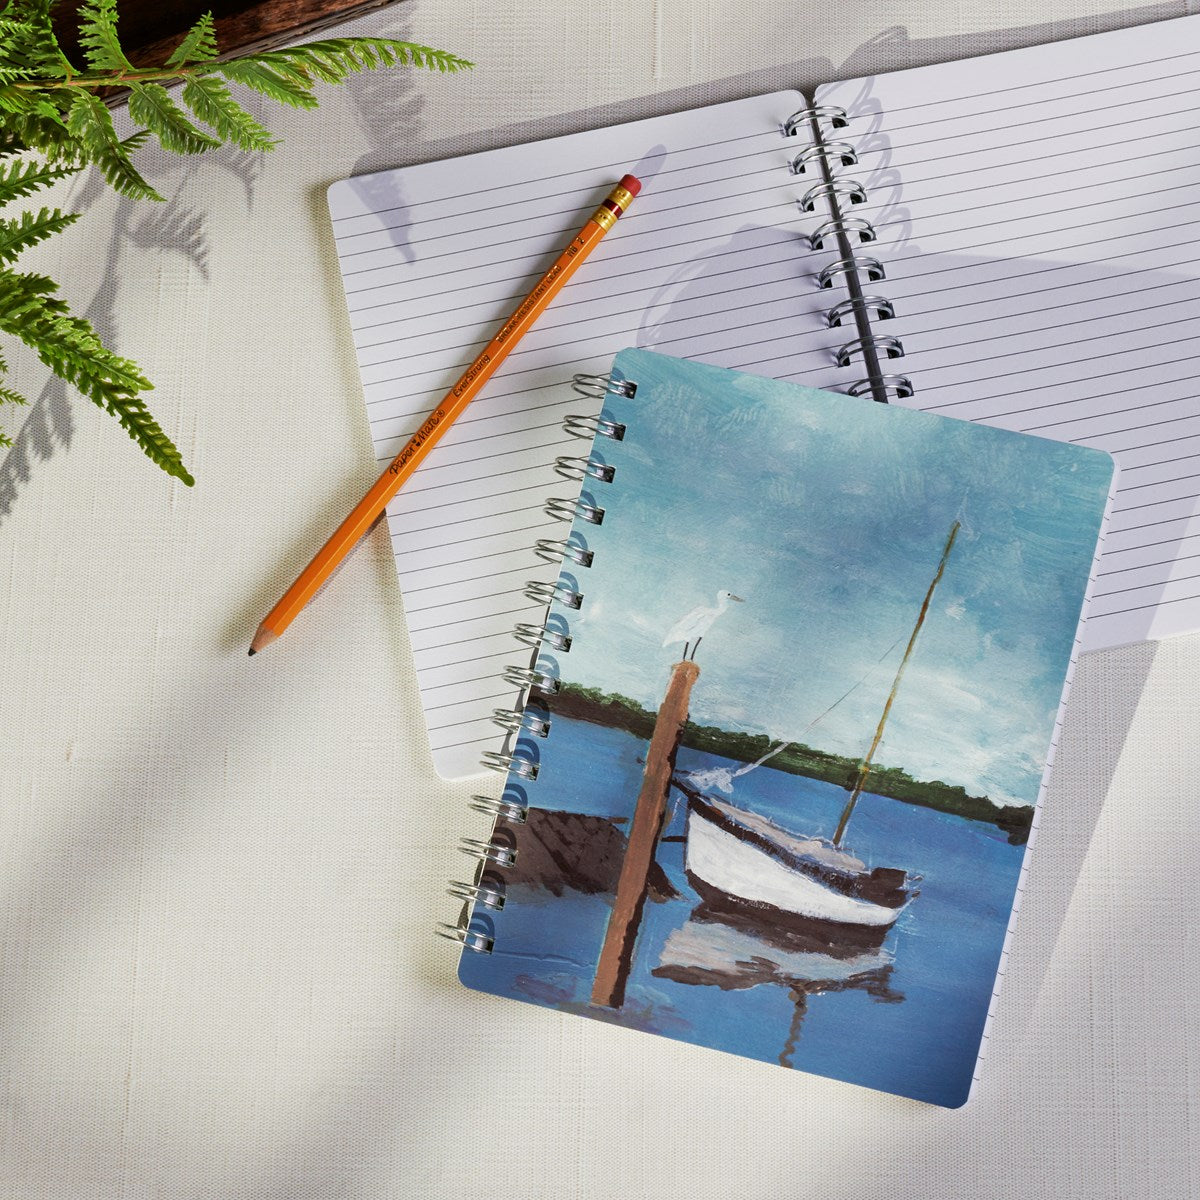 Boat - Spiral Notebook